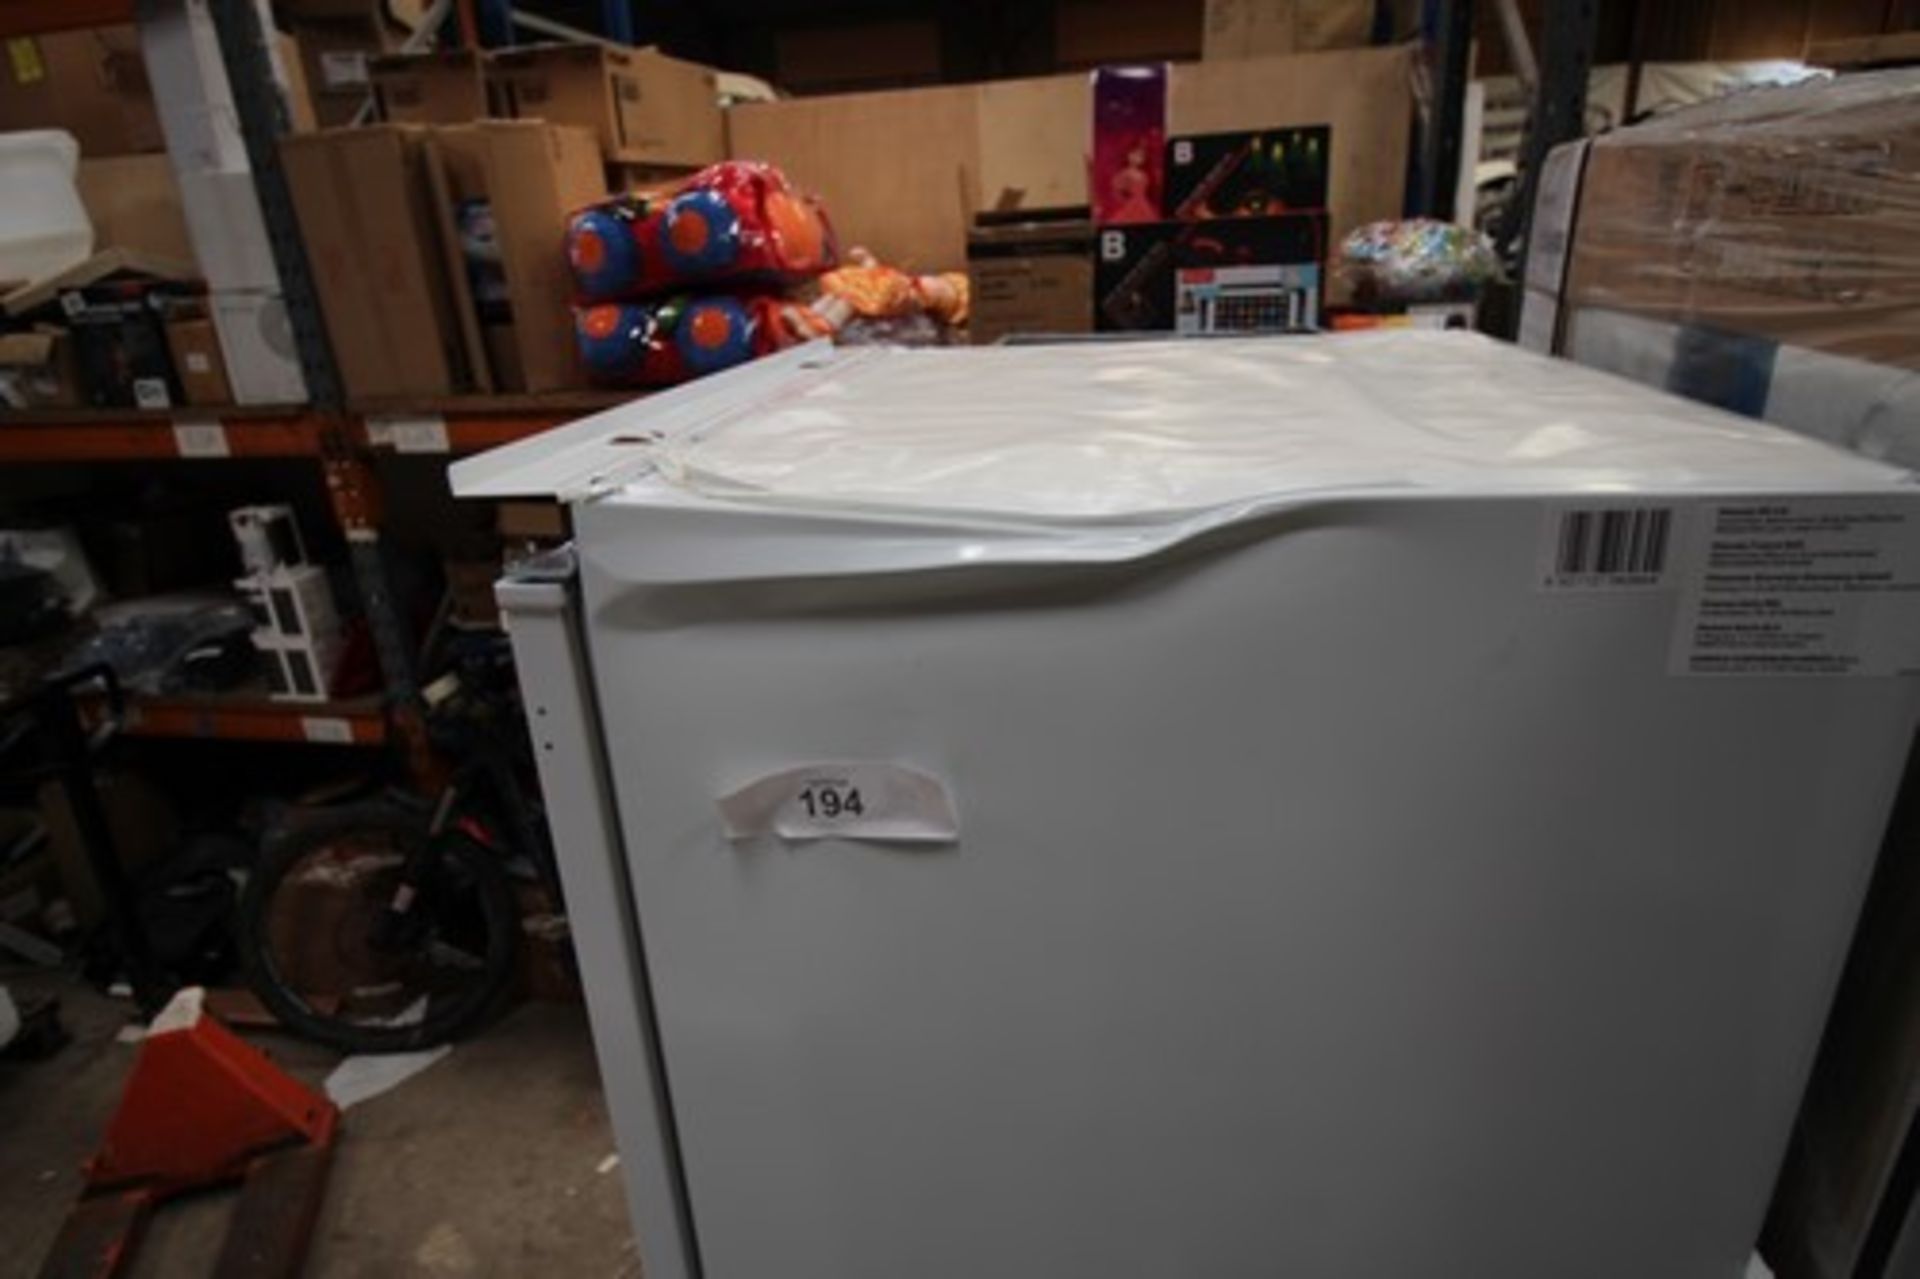 1 x Hisense built in fridge freezer, Model RIB312F4AWE, dented top right corner - New (eBay 10) - Image 3 of 5